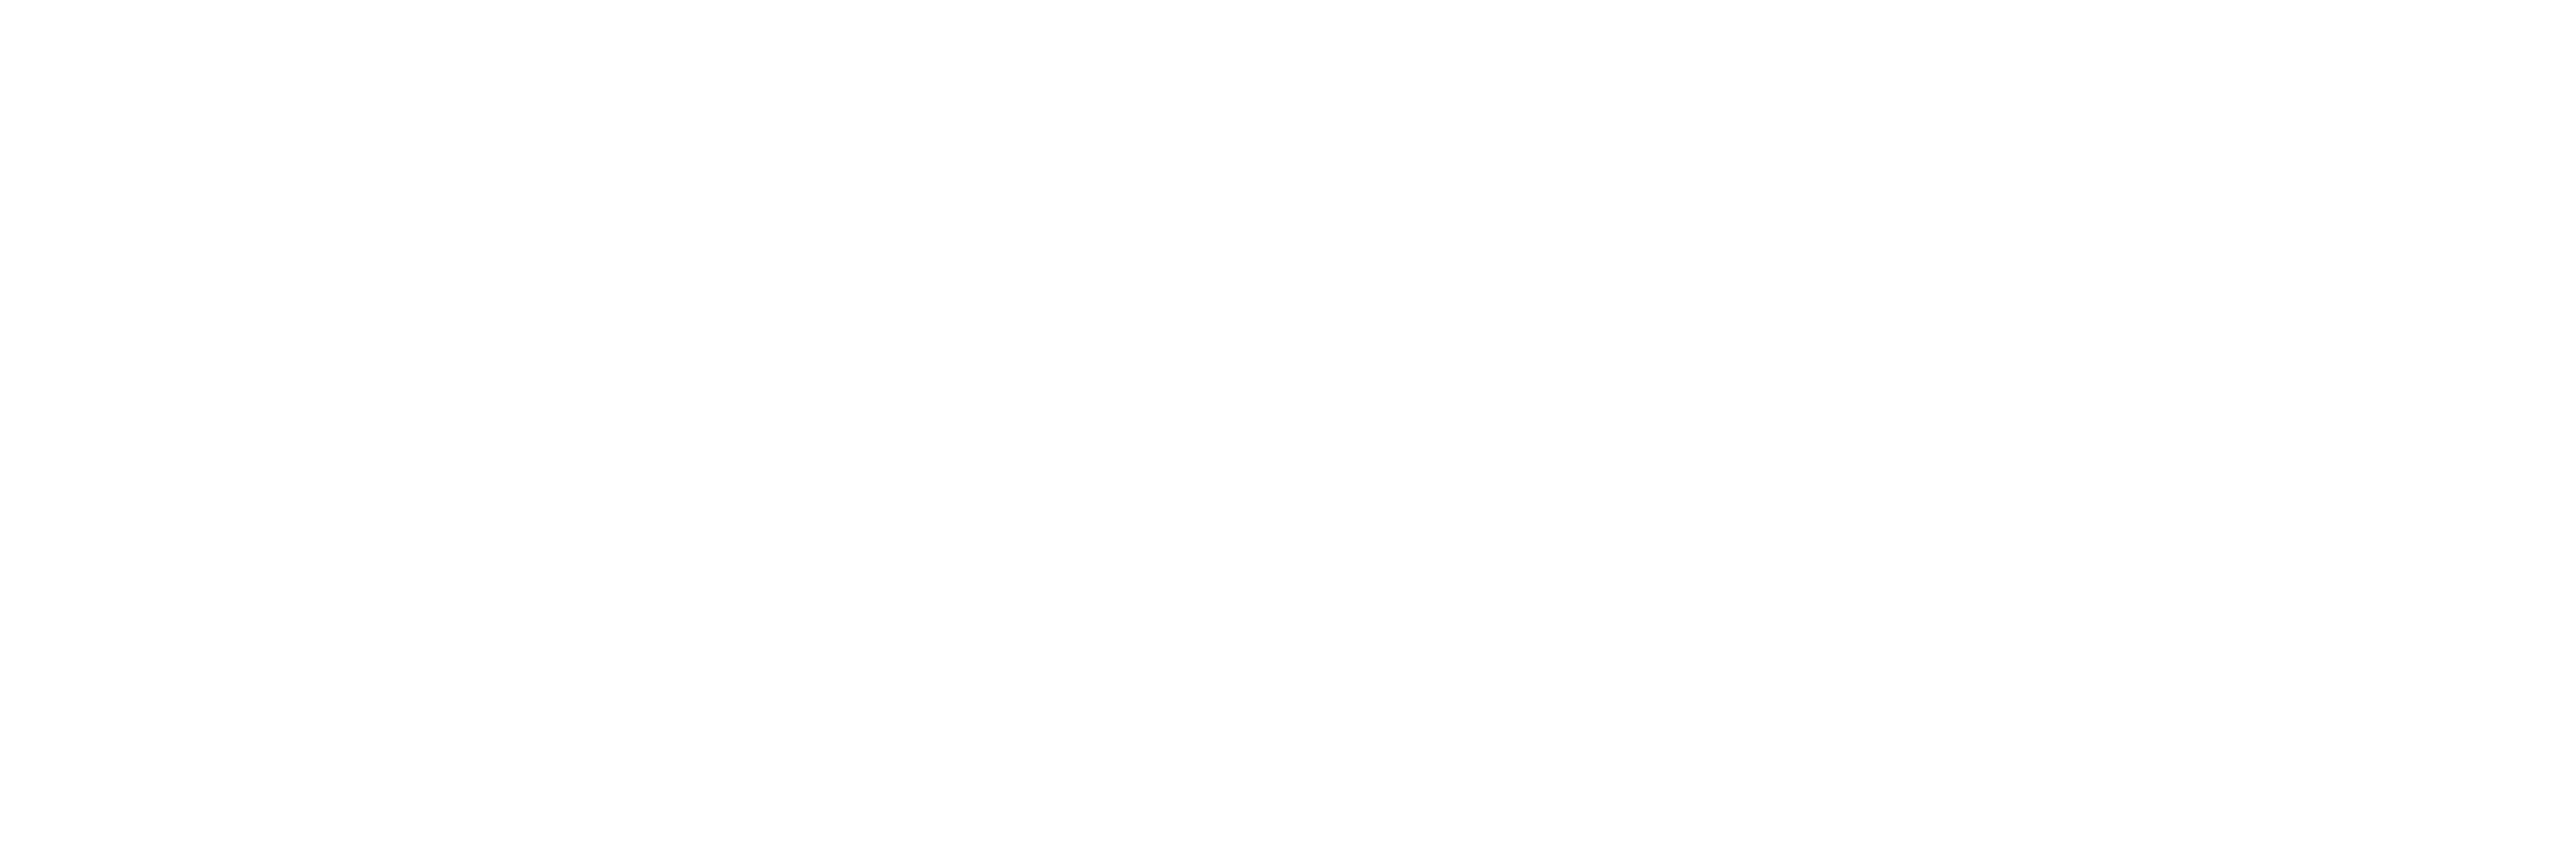 AniCura Marina Alta Centro Veterinario logo